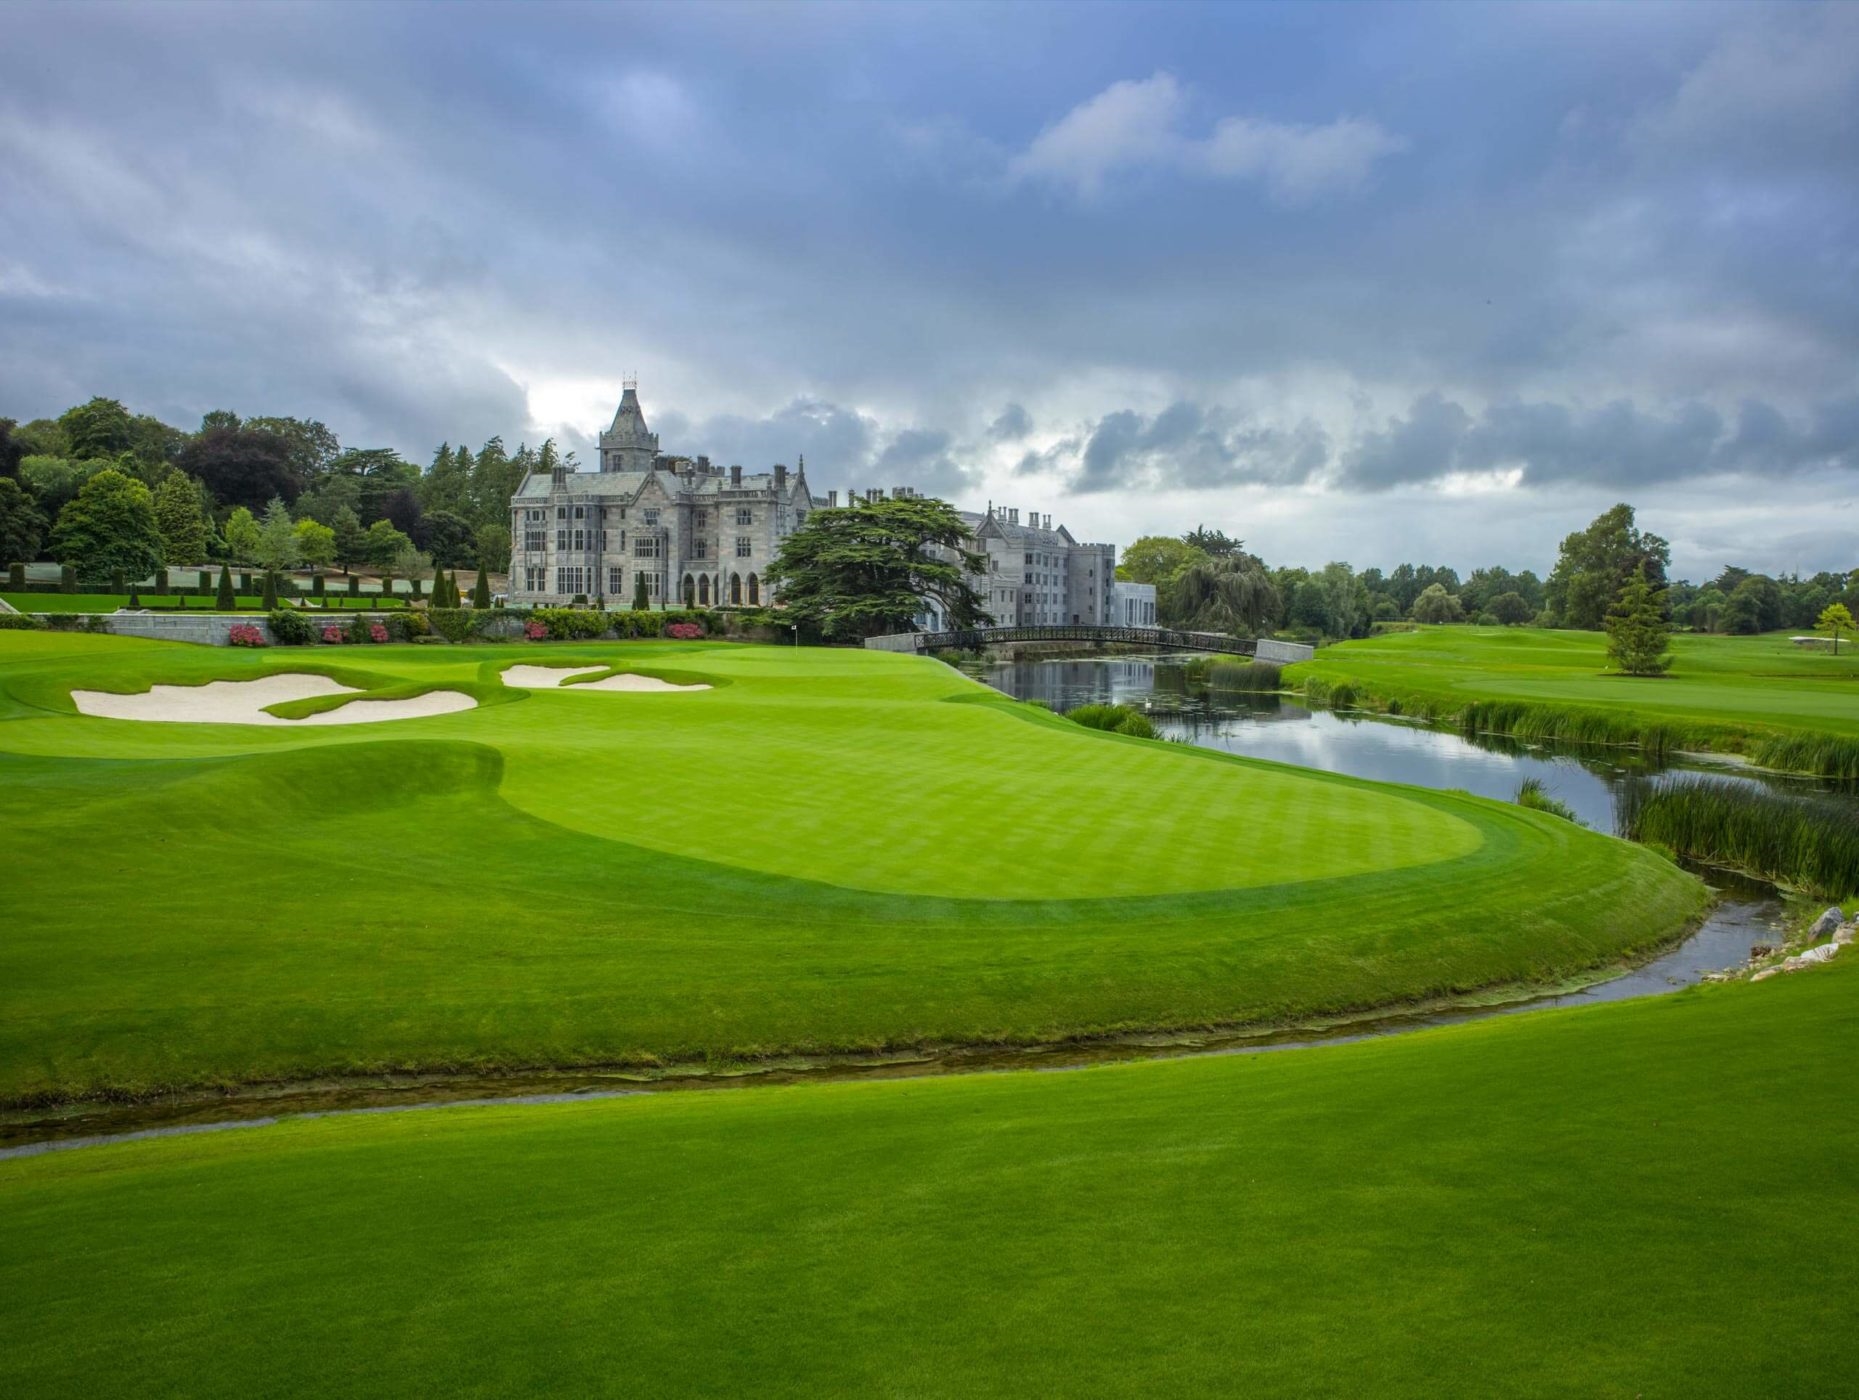 The Golf Course - Adare Manor